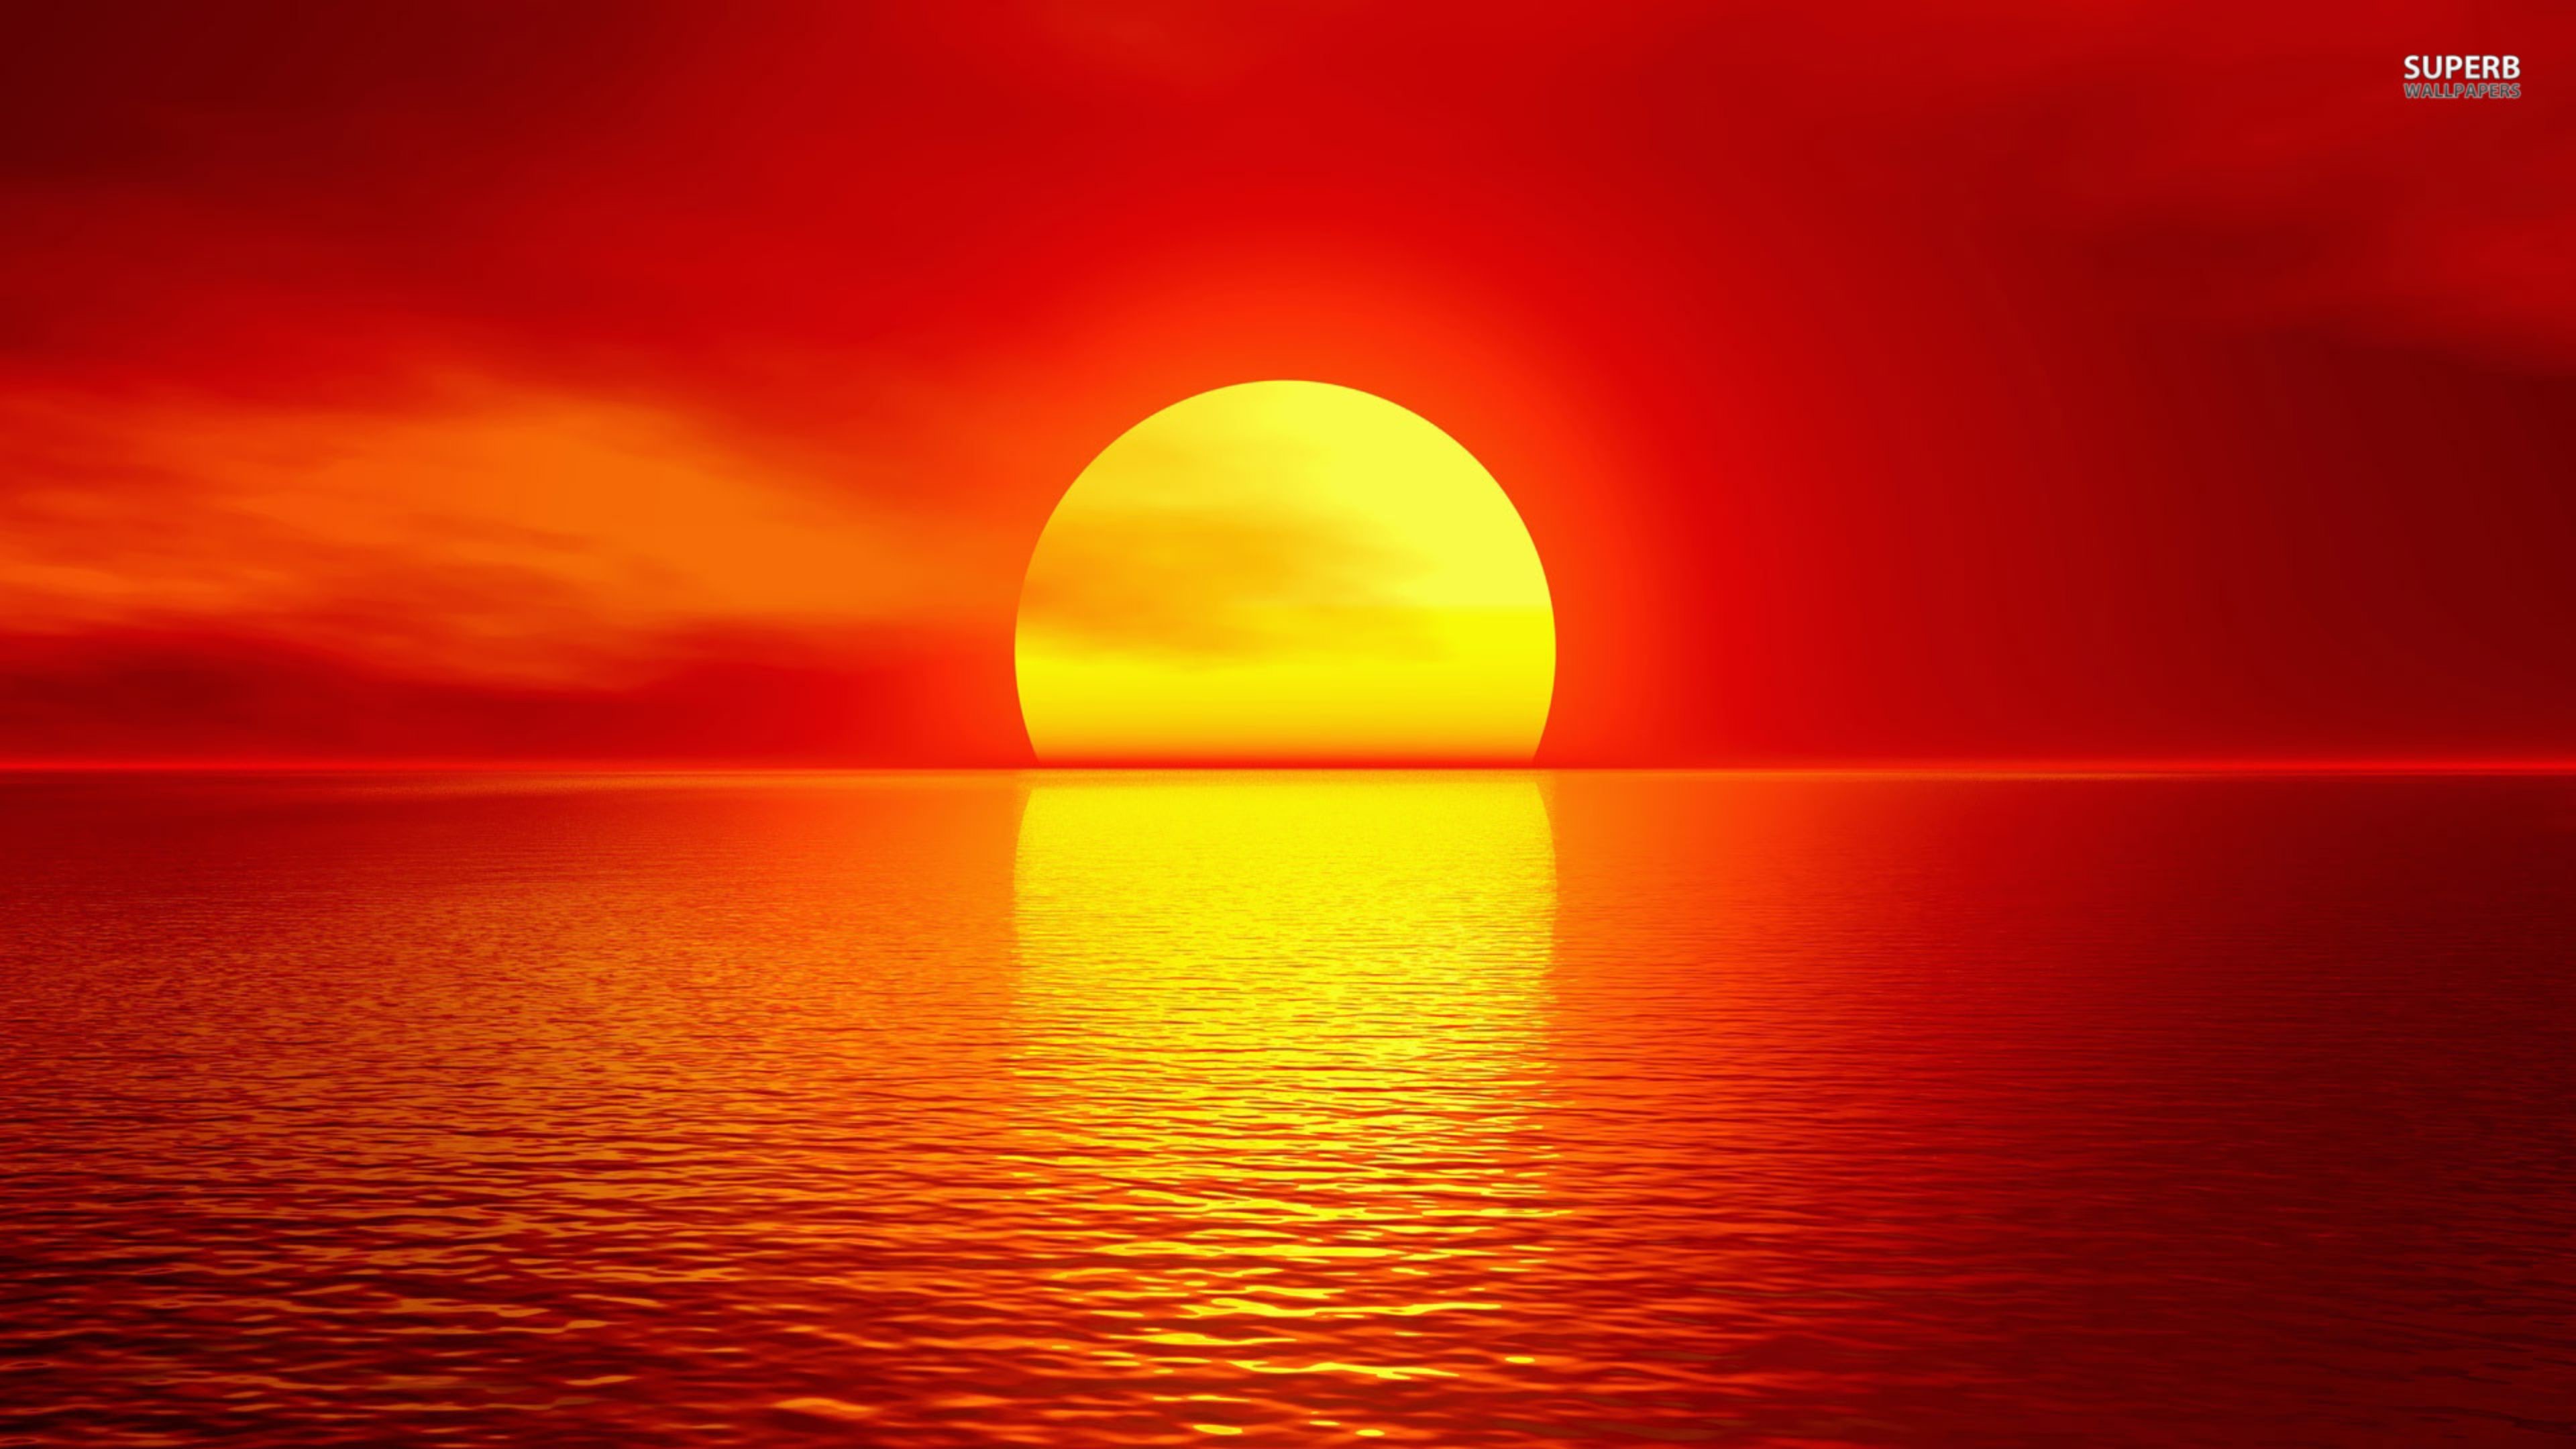 🔥 Free Download 4K Sunset Wallpaper Images [3840X2160] For Your Desktop